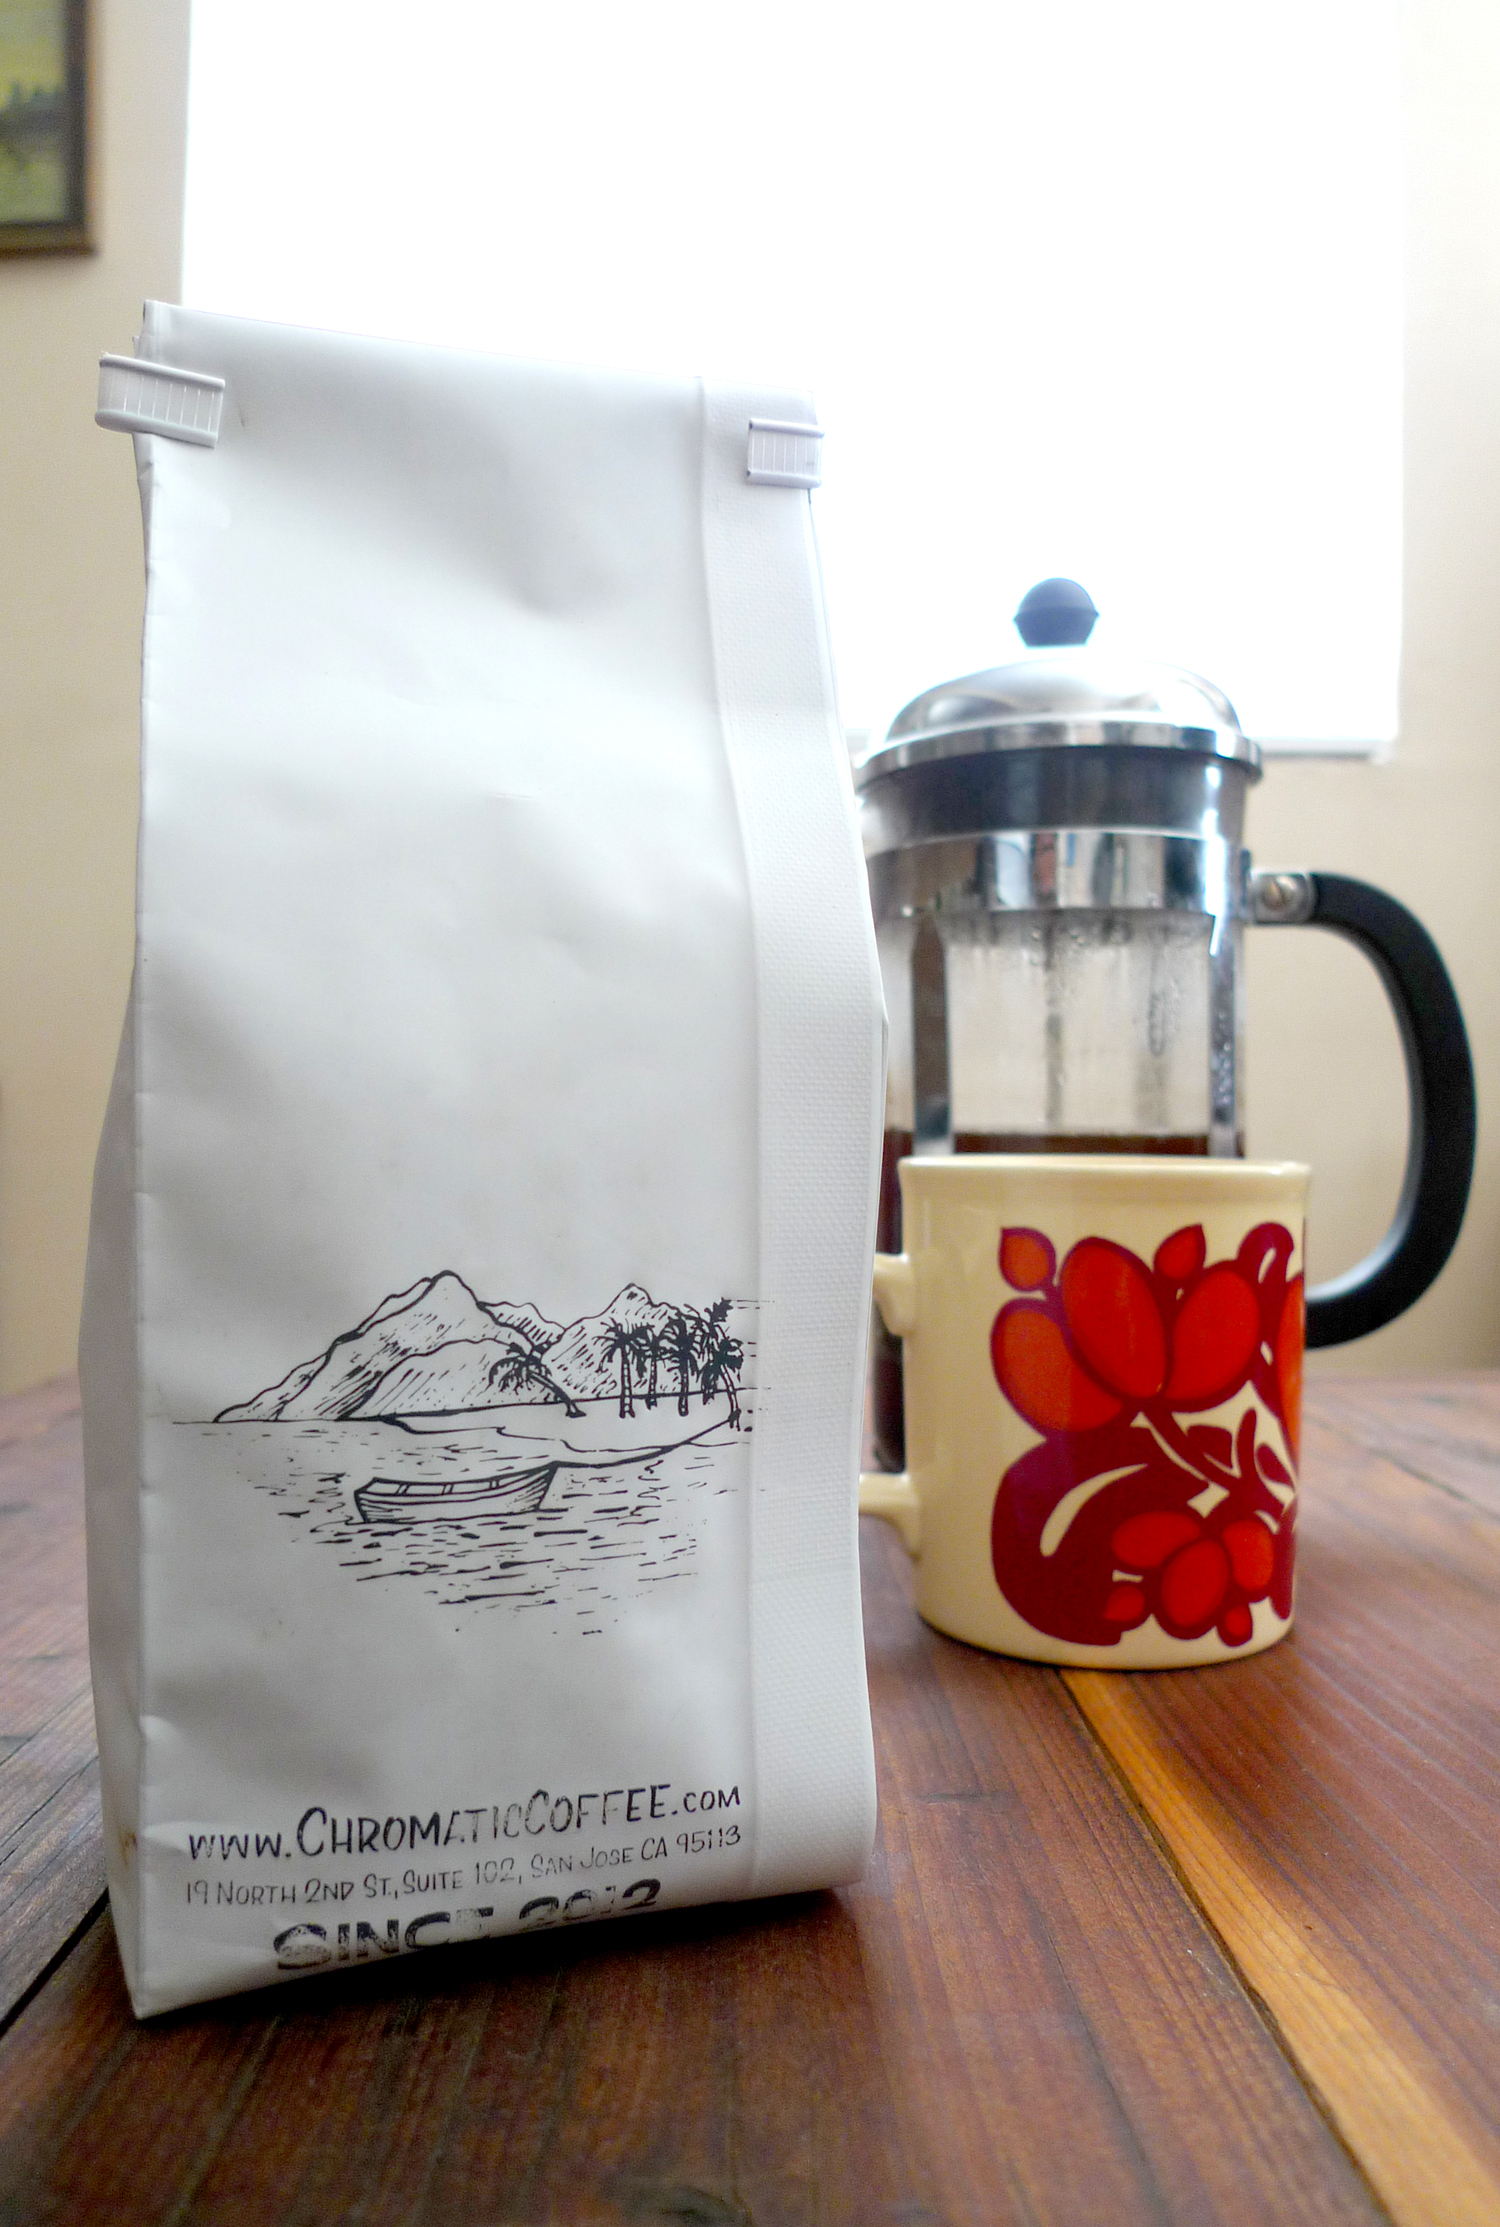 Chromatic Coffee Bag backview 1500px.JPG